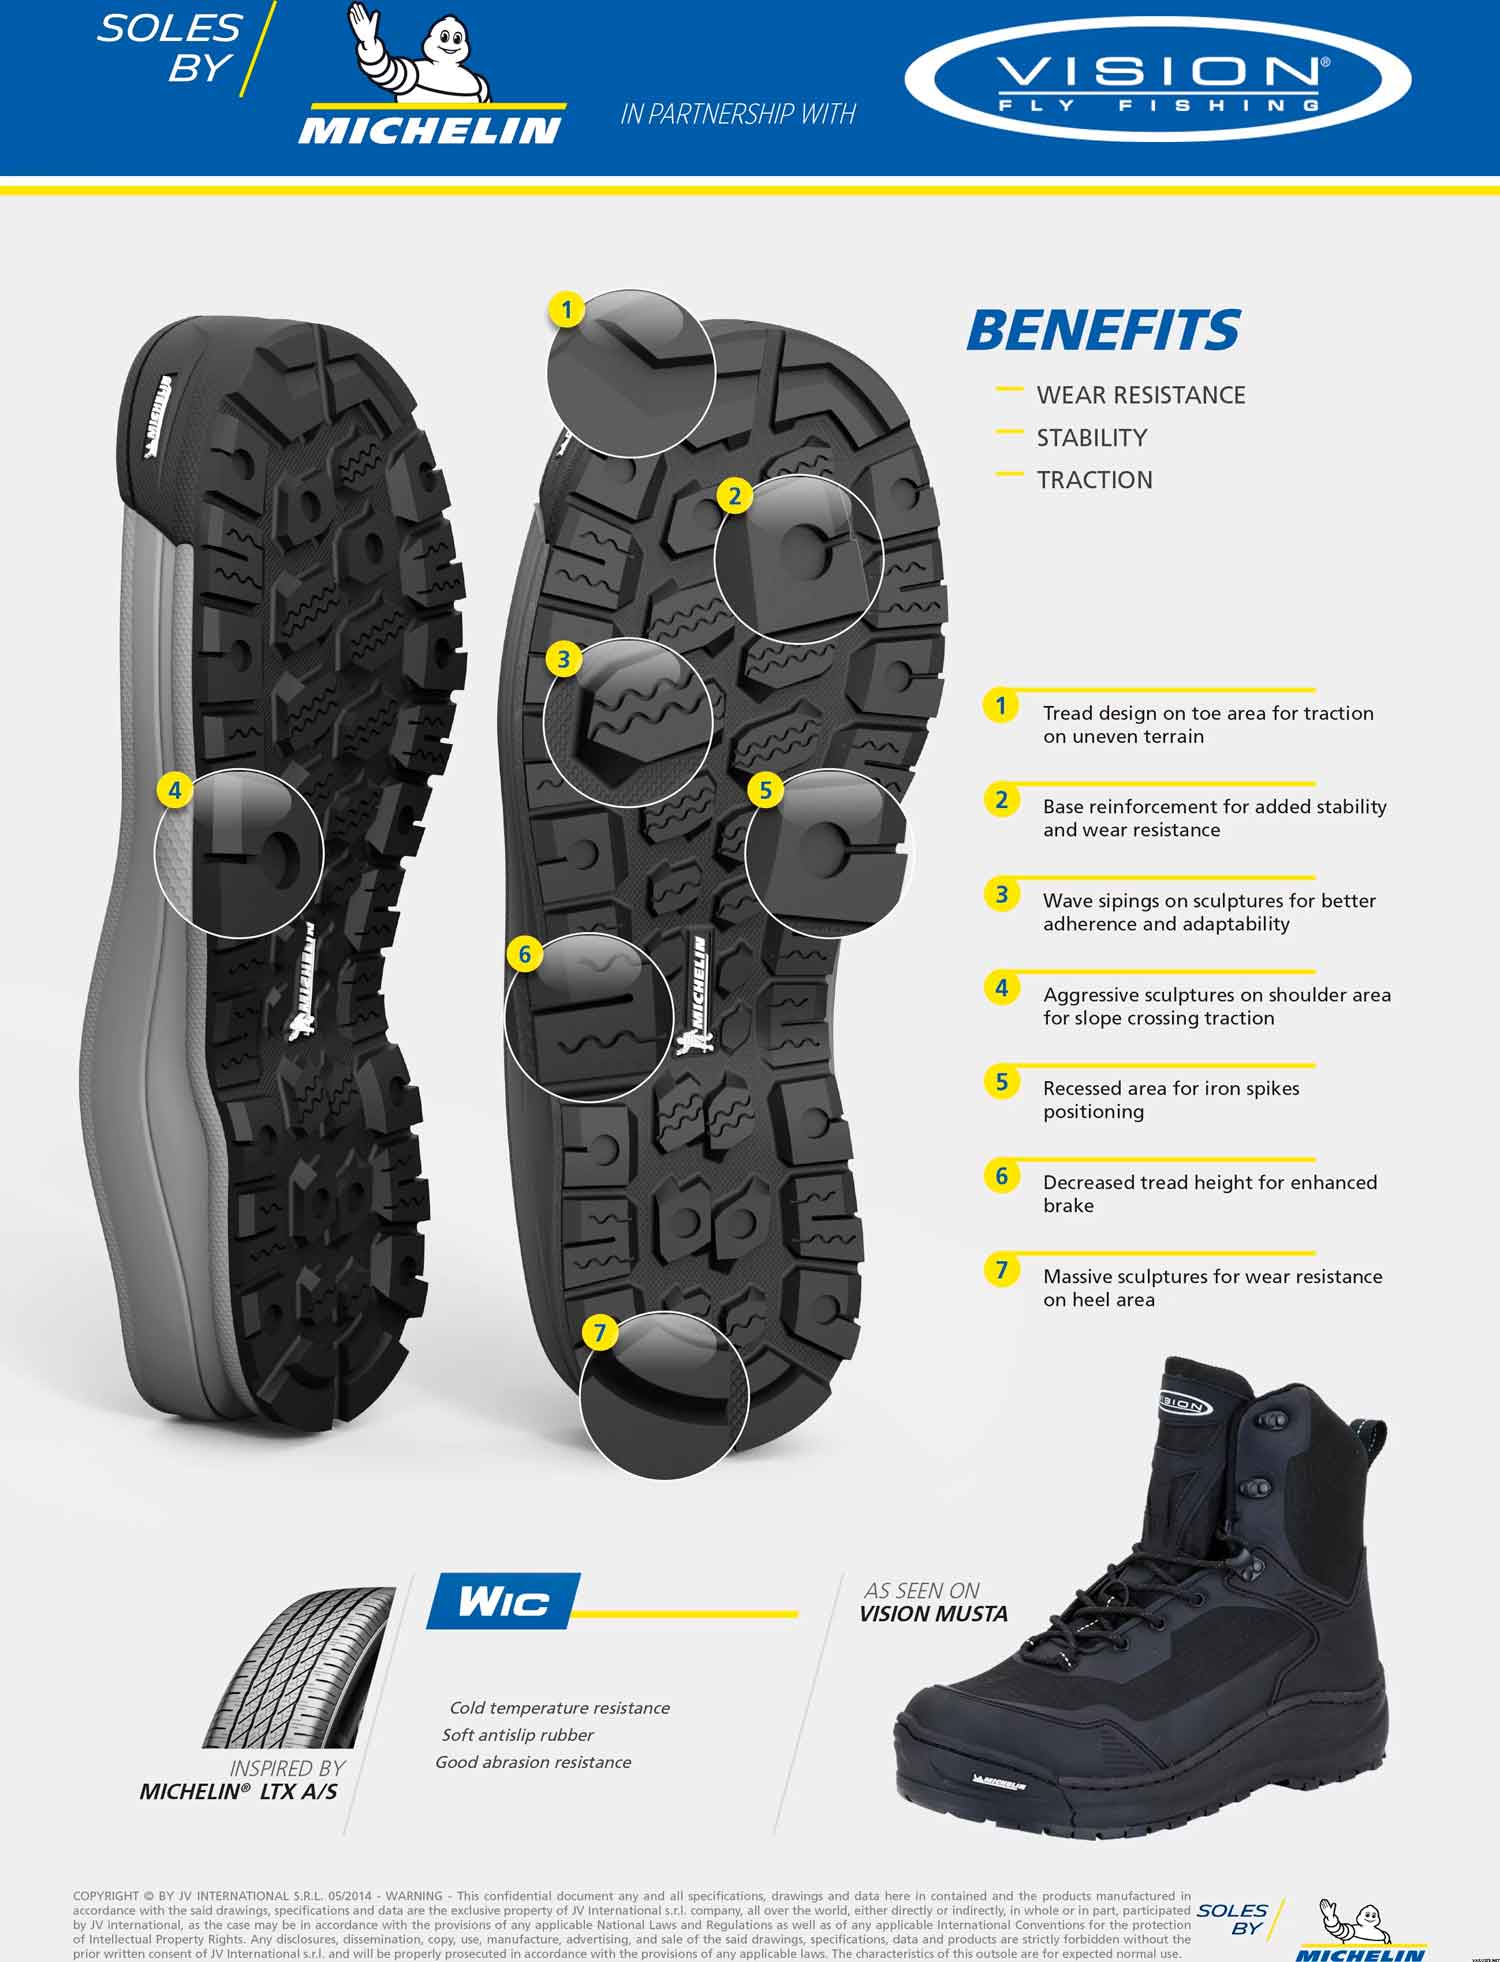 Botas-Vision-Musta-Michelin-Boots